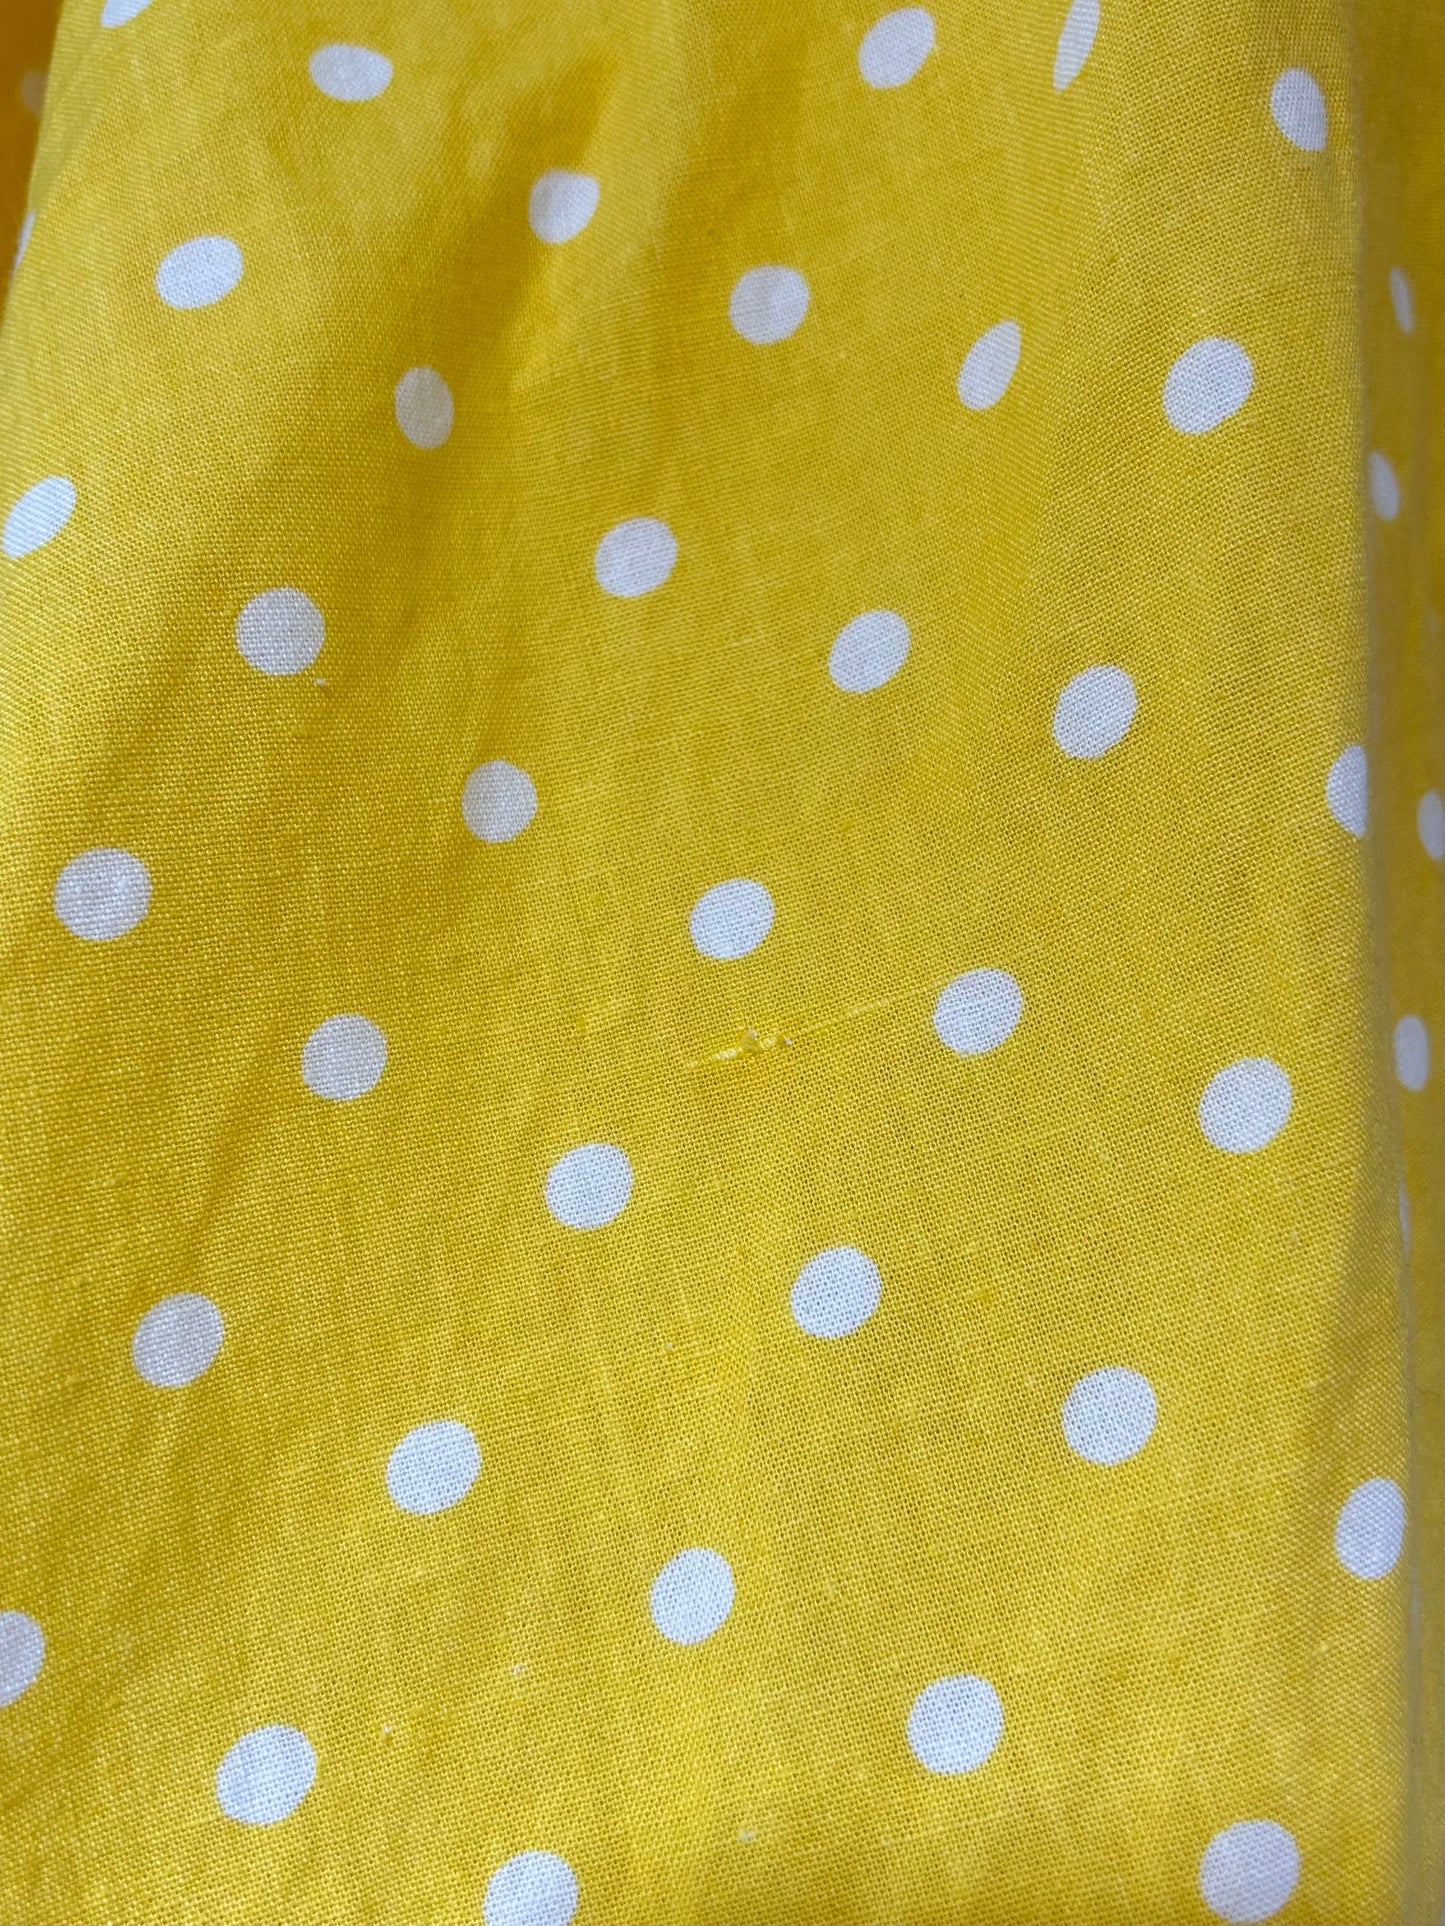 Vintage Circular Cotton Skirt [B26194]